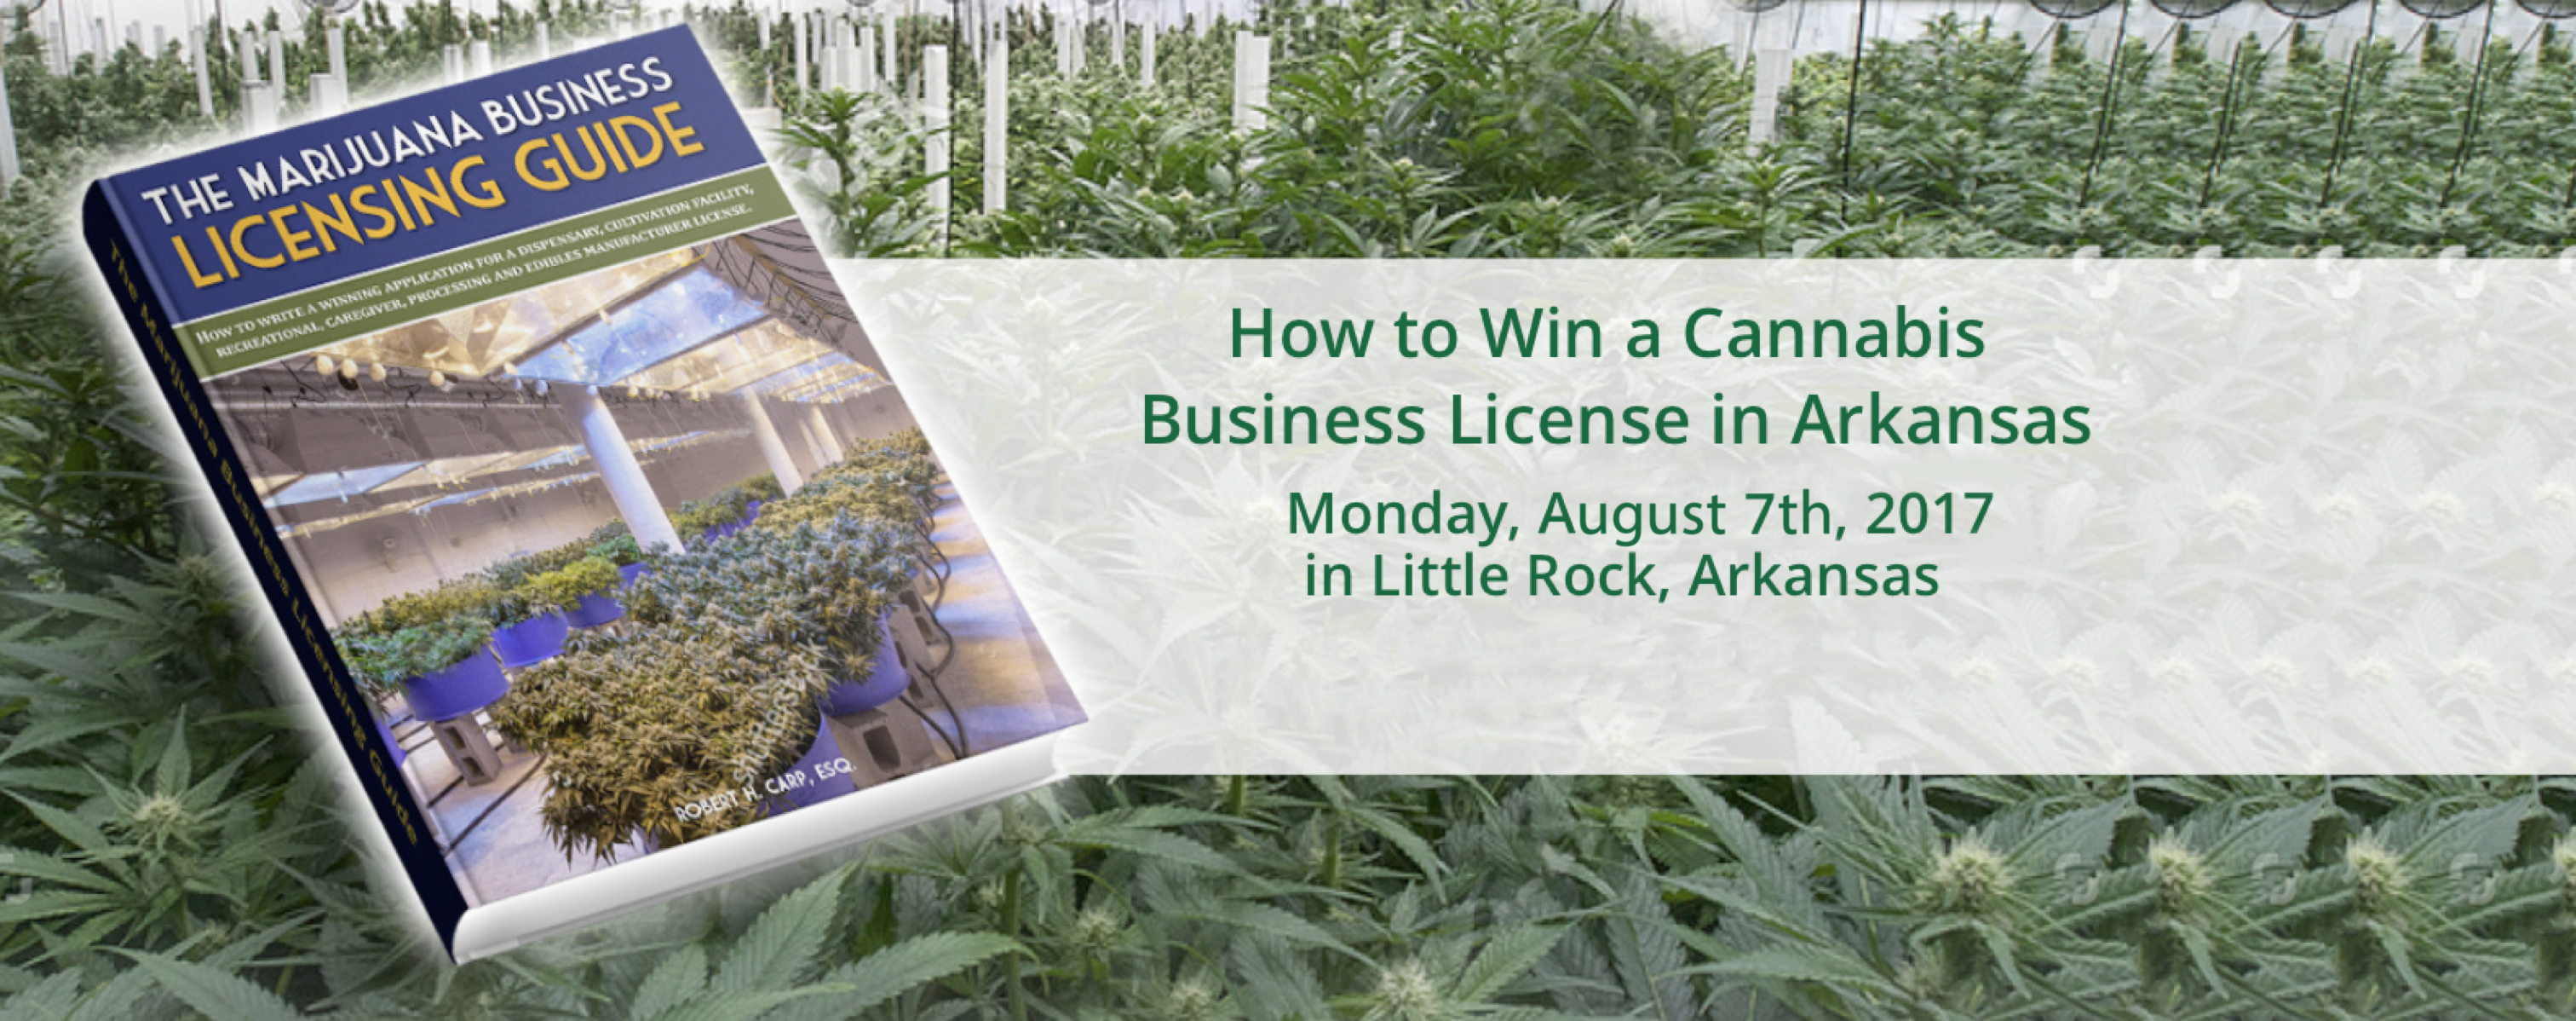 Robert Carp Seminar: How to Win a Cannabis Business License in Arkansas